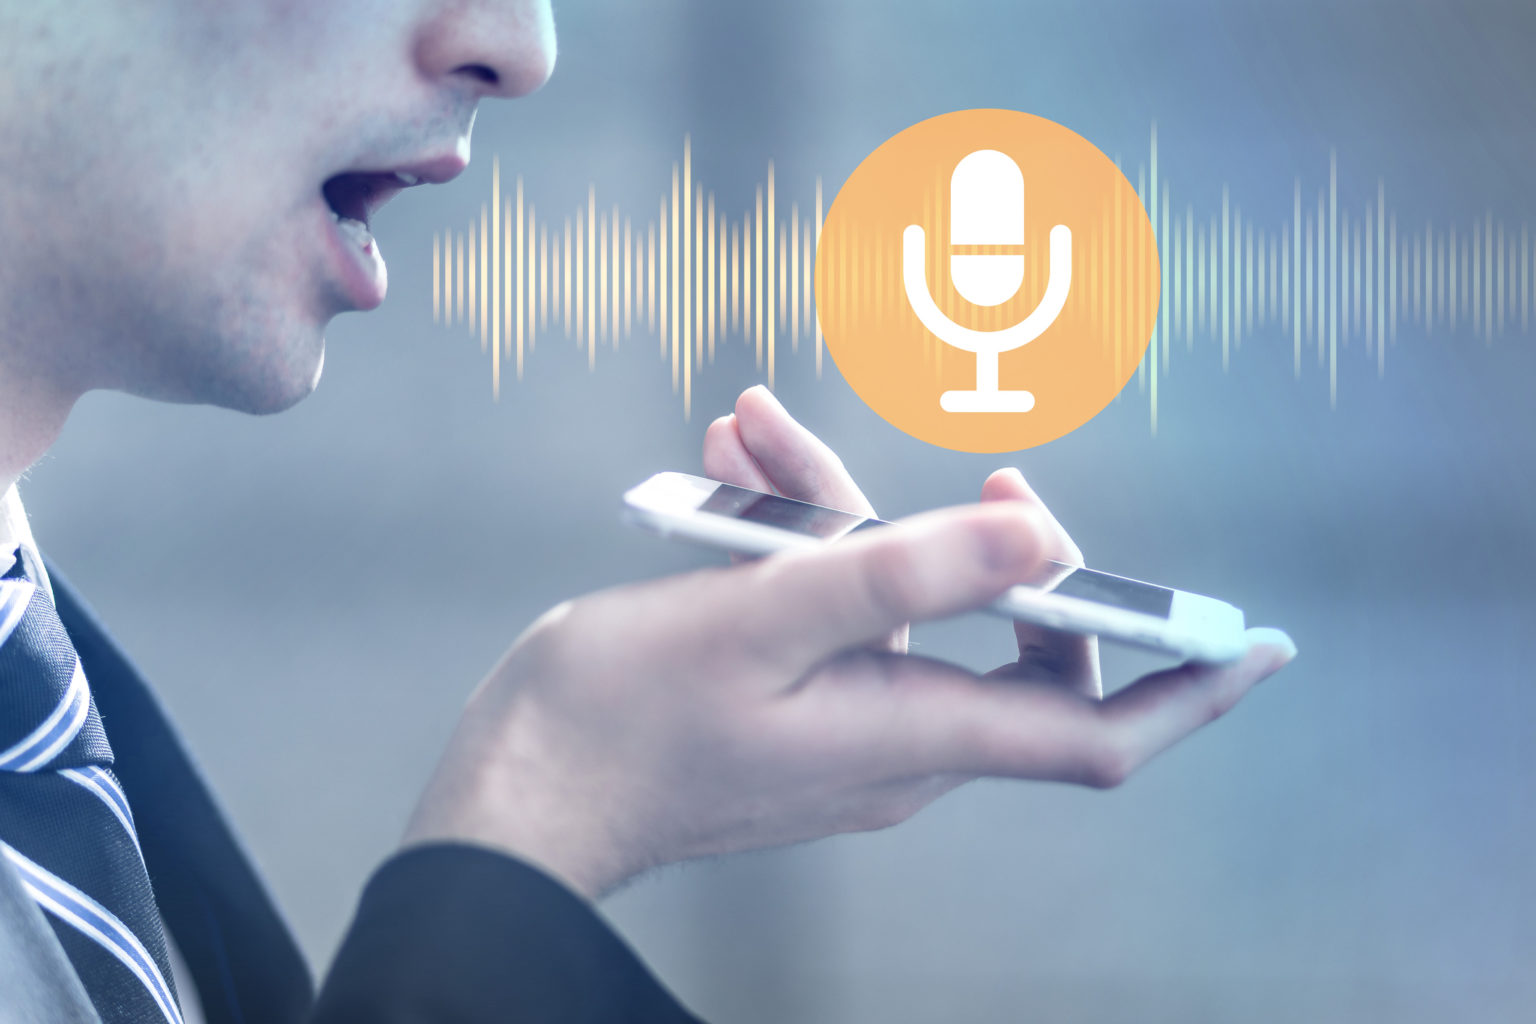 Speech and Voice Analytics Market